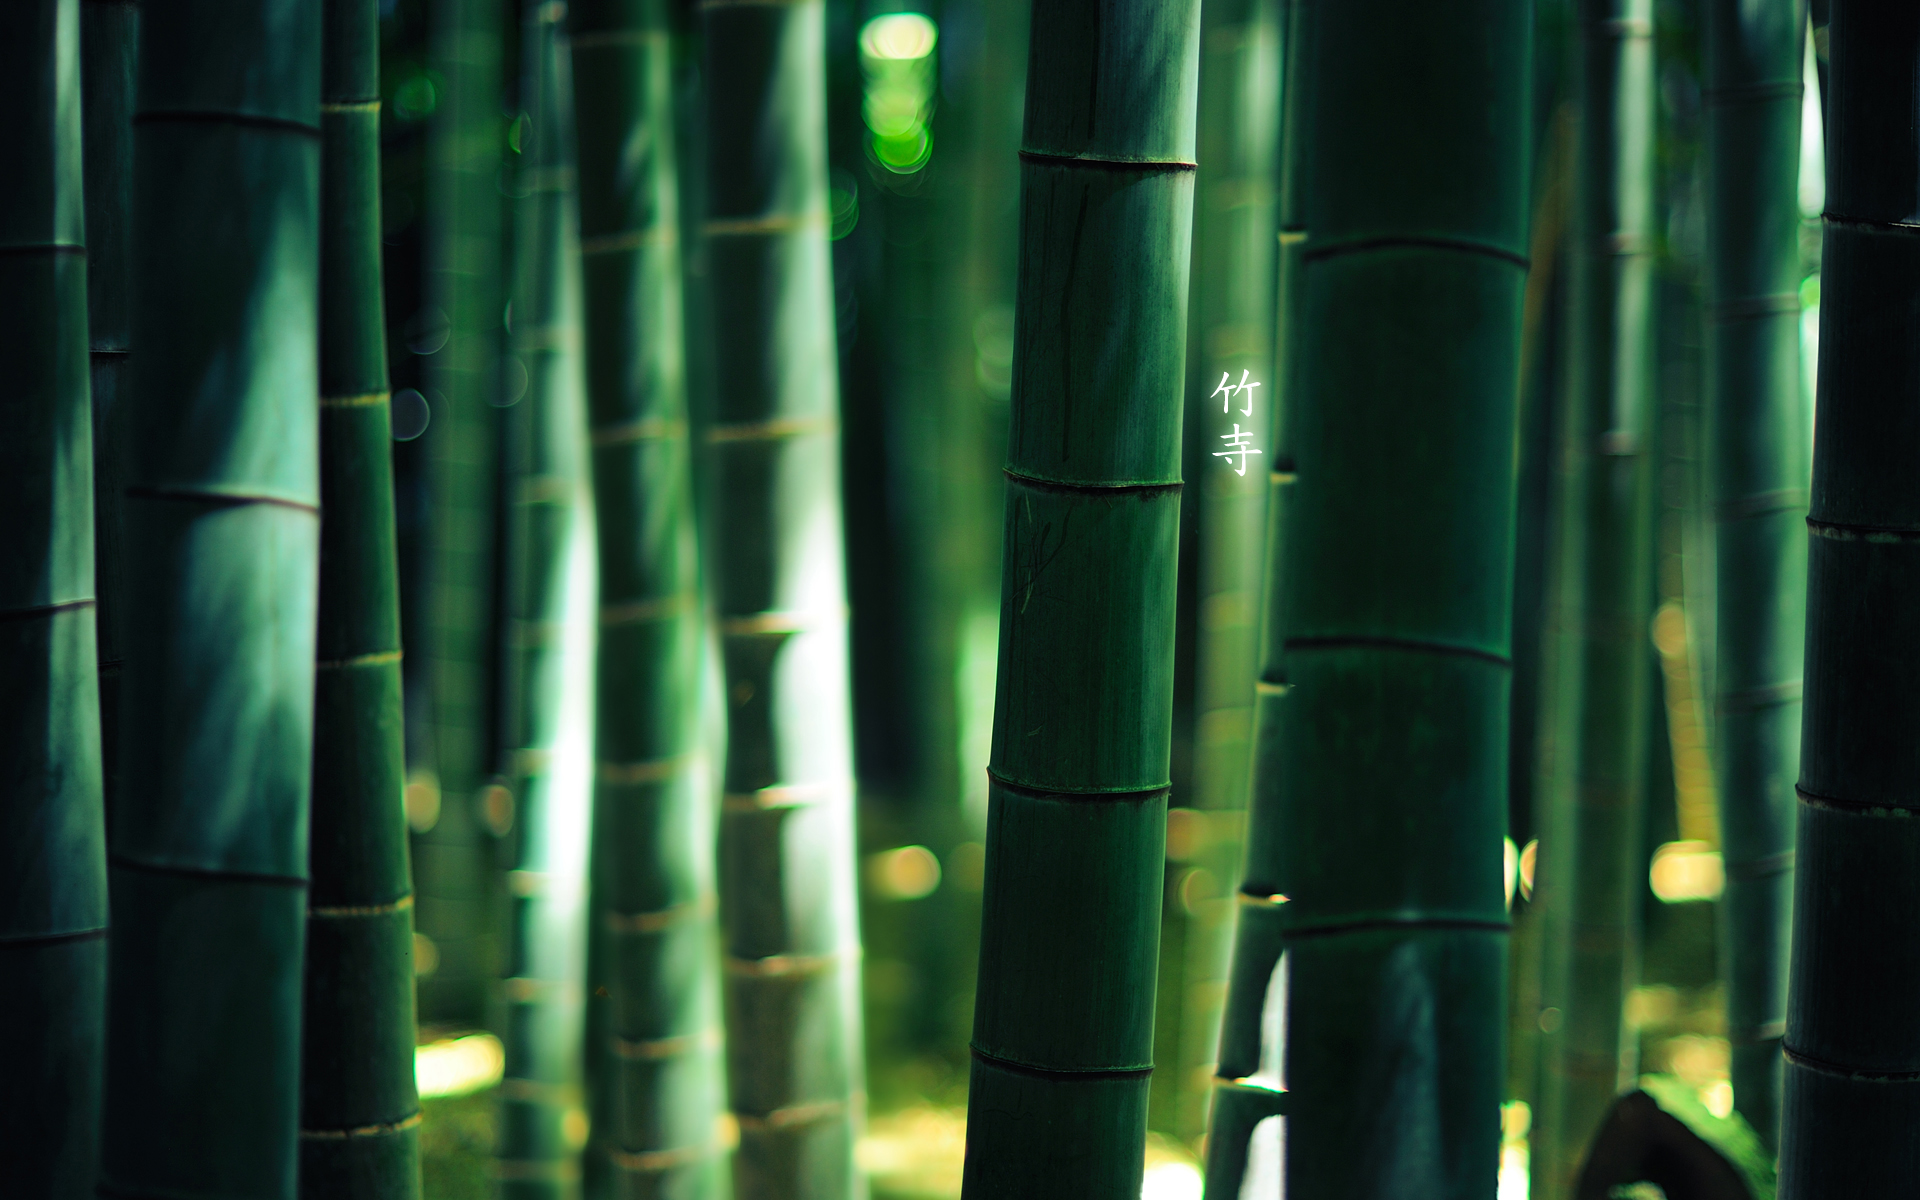 184321 descargar imagen tierra/naturaleza, bambú: fondos de pantalla y protectores de pantalla gratis